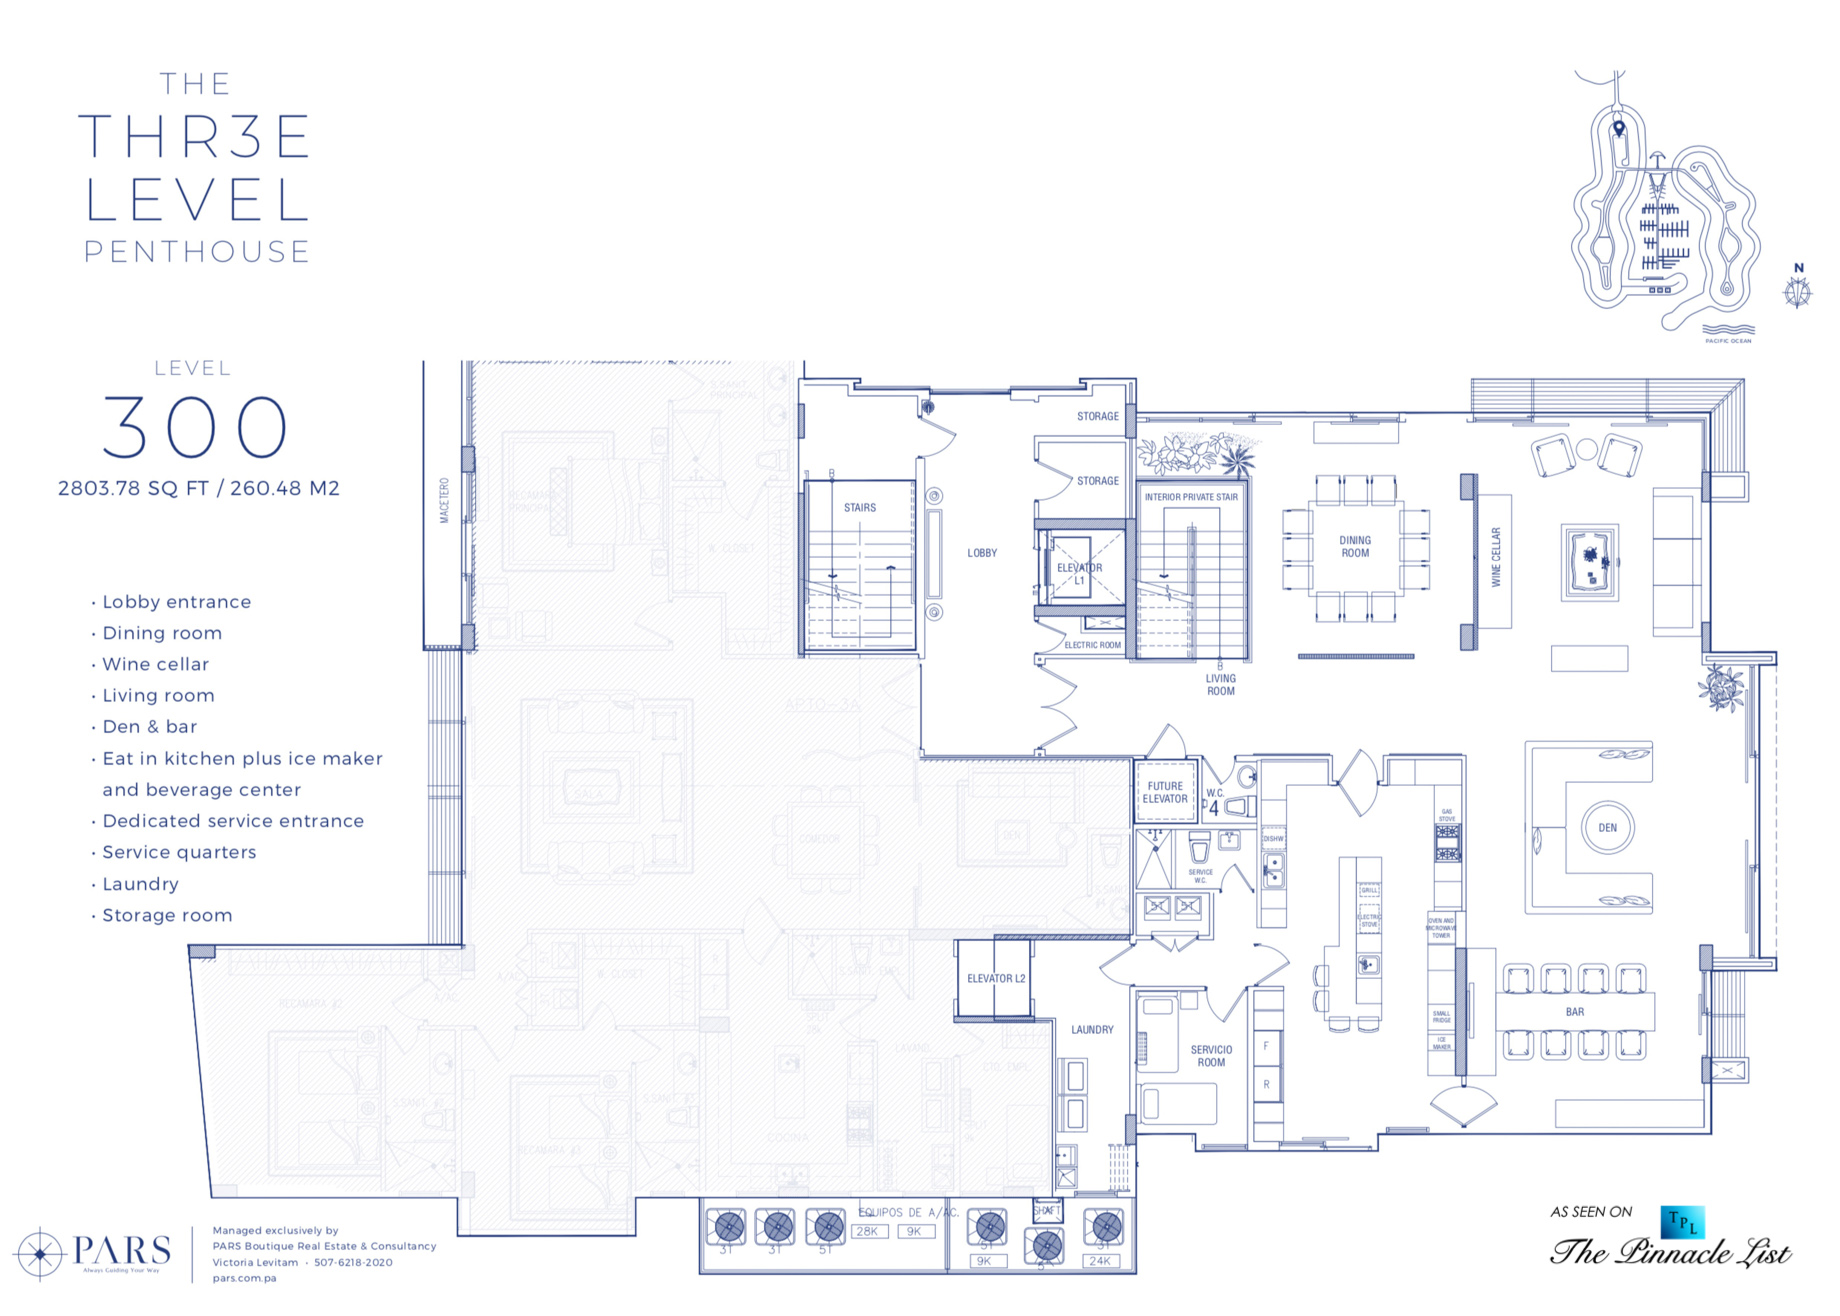 Thr3e Level Penthouse – Ocean Reef Island, Panama – Floor Plan Level 300